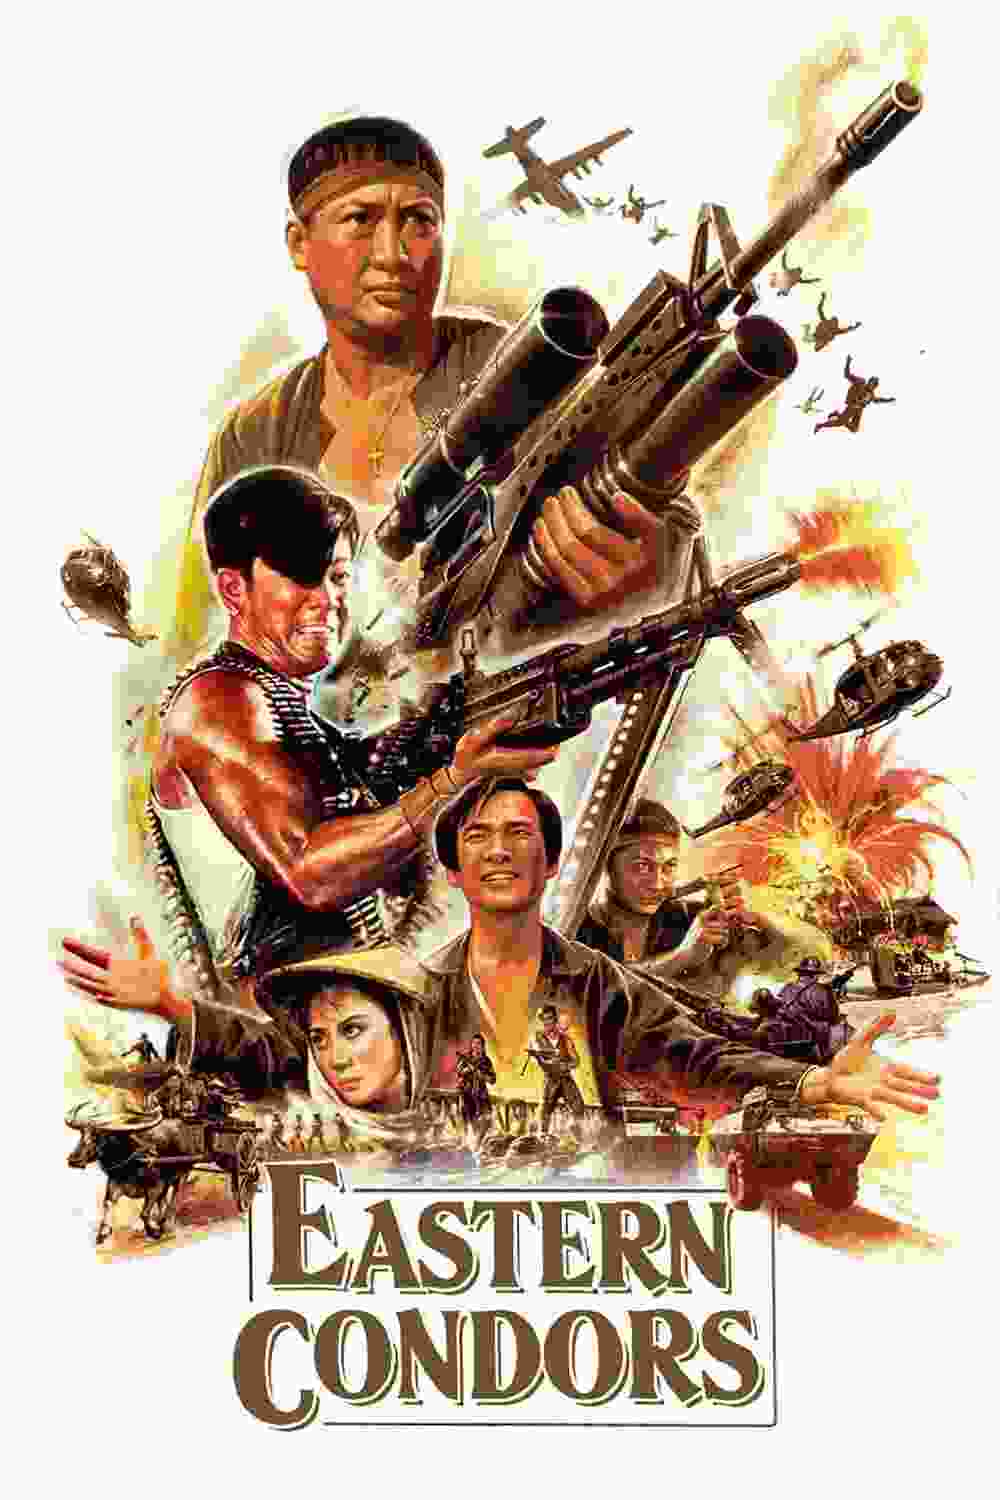 Eastern Condors (1987) Sammo Kam-Bo Hung